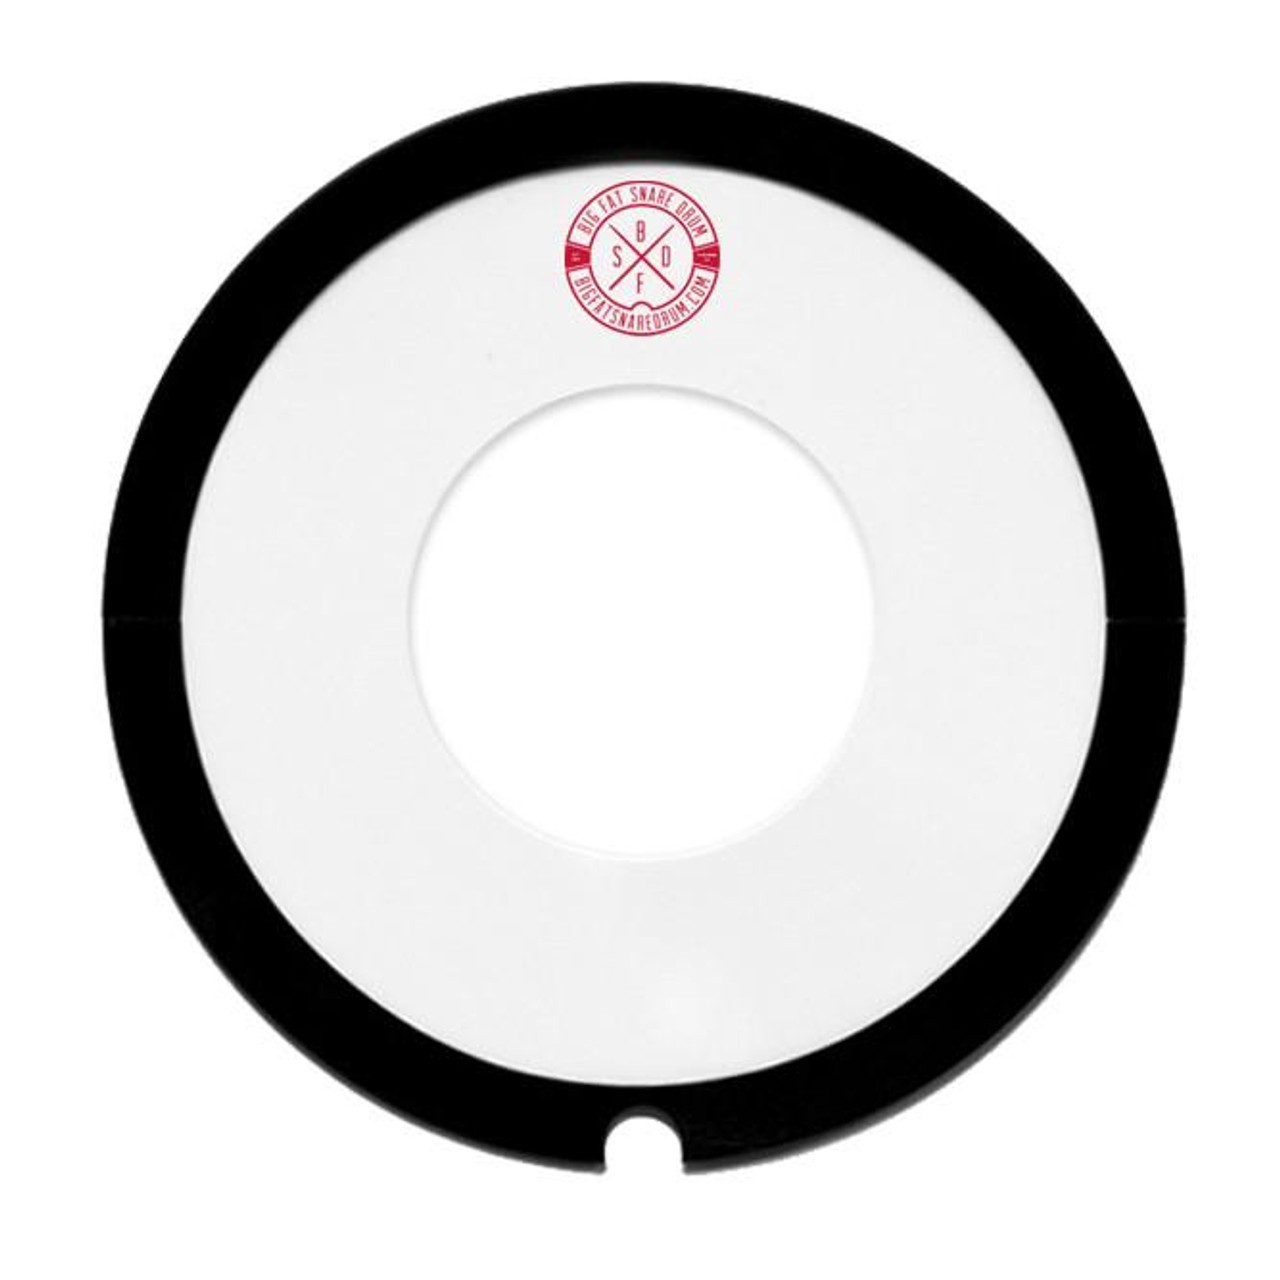 Big Fat Snare Drum - Steve's Donut -13 inch - 13-BFSD-DON